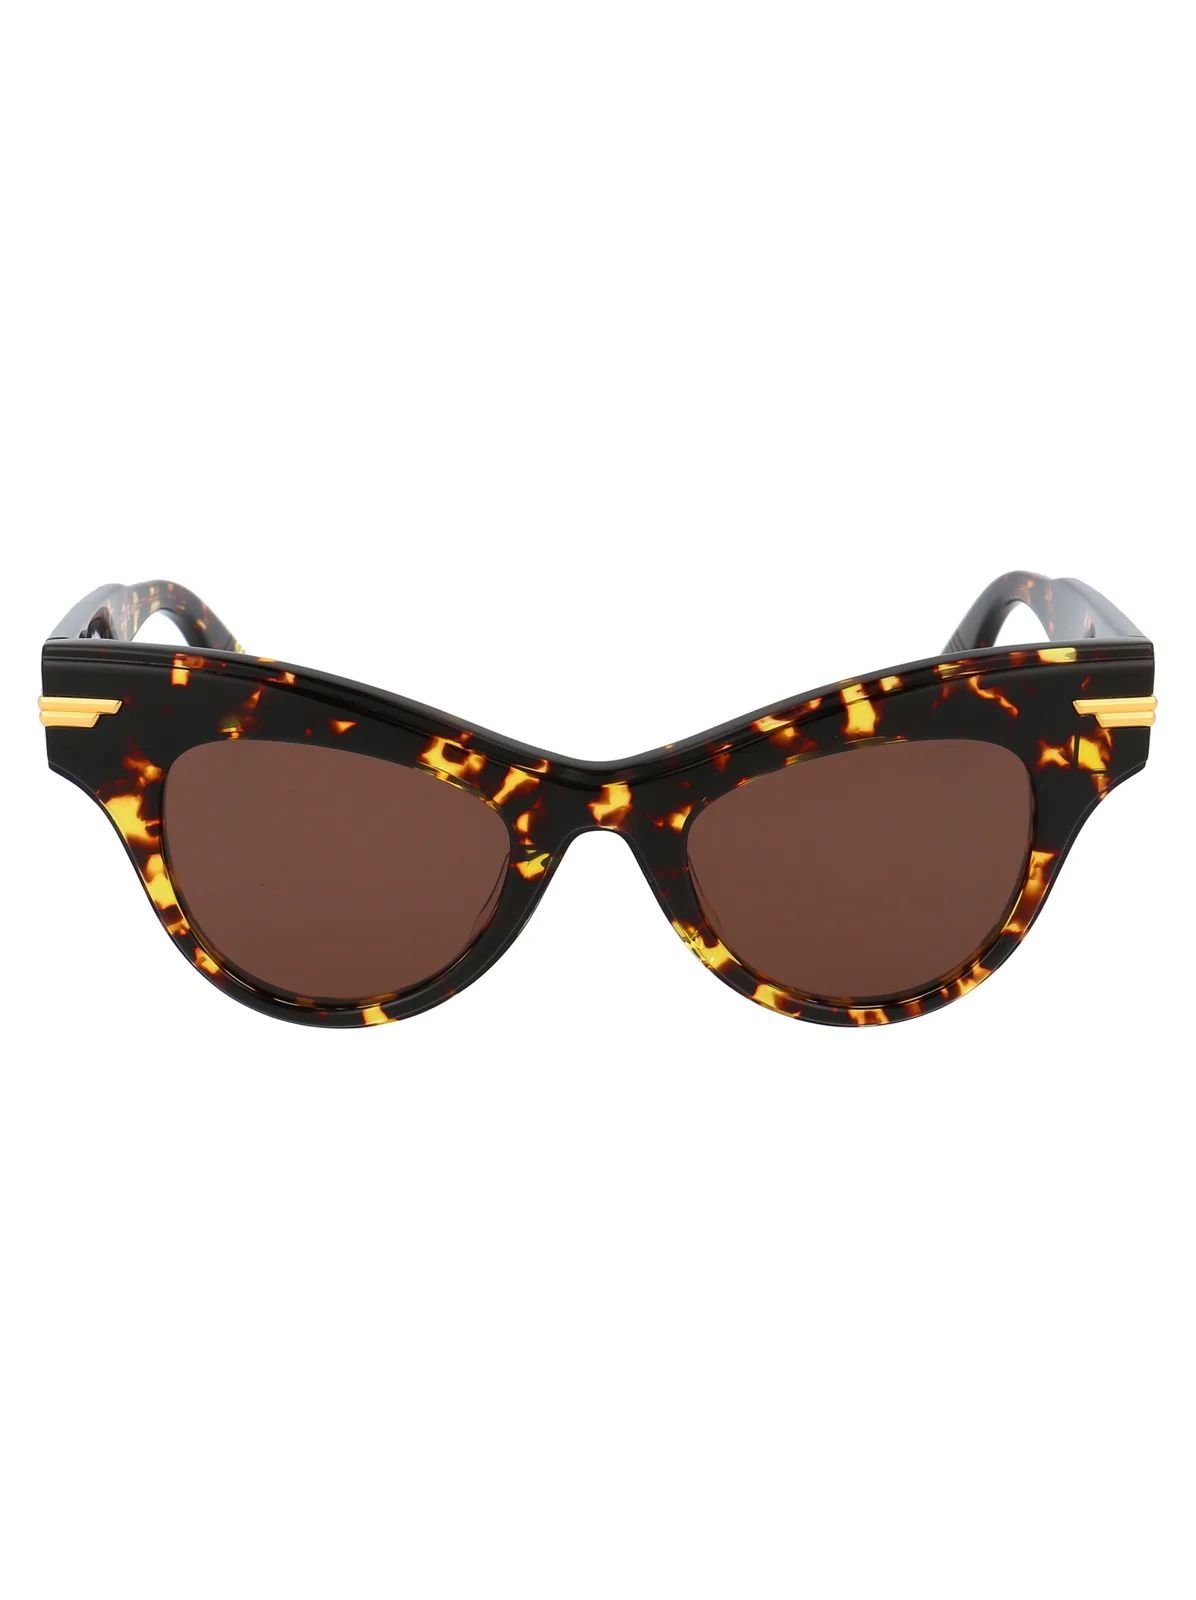 Bottega Veneta Eyewear Cat Eye Sunglasses | Cettire Global